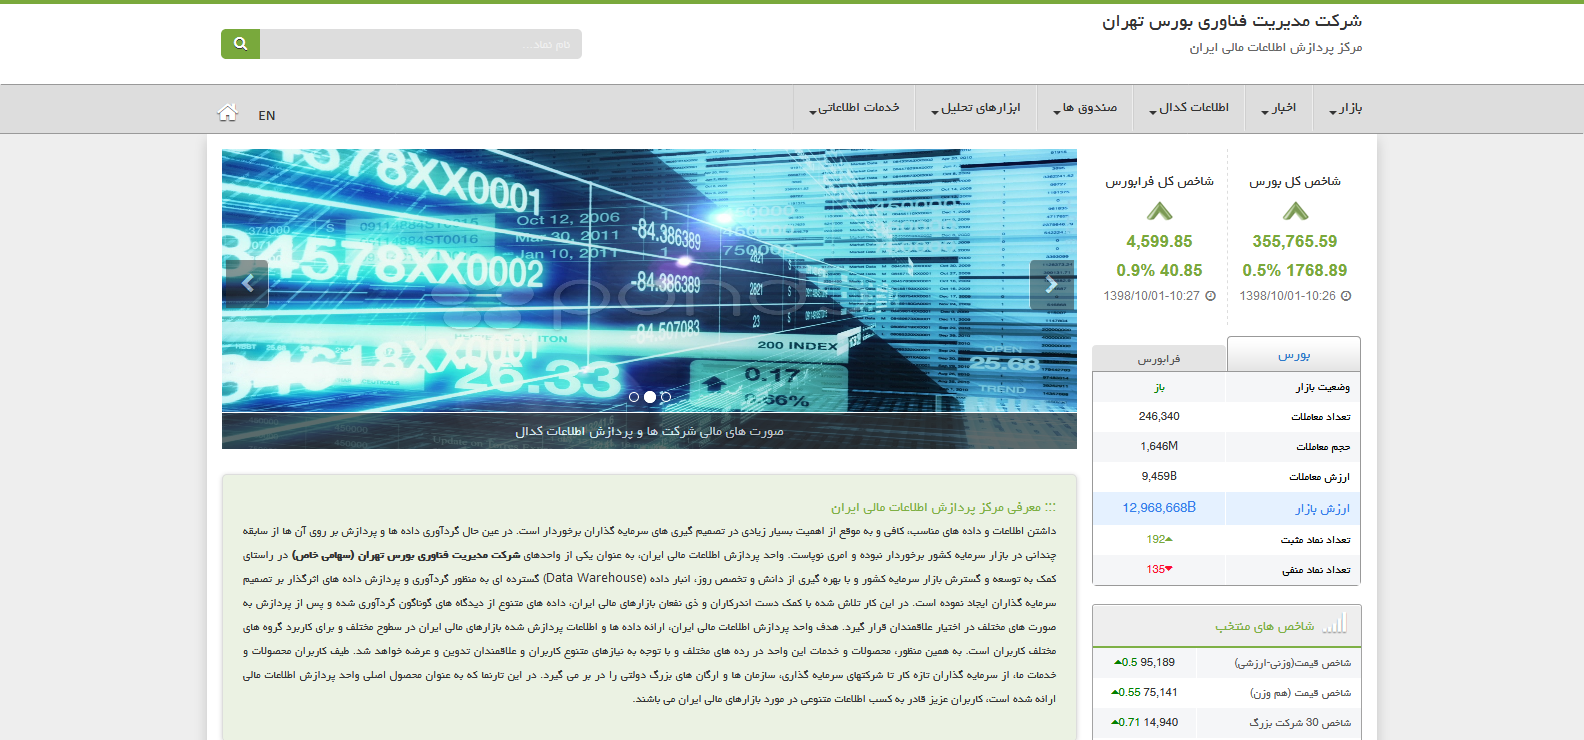 سامانه مرکز پردازش اطلاعات مالی ایران  